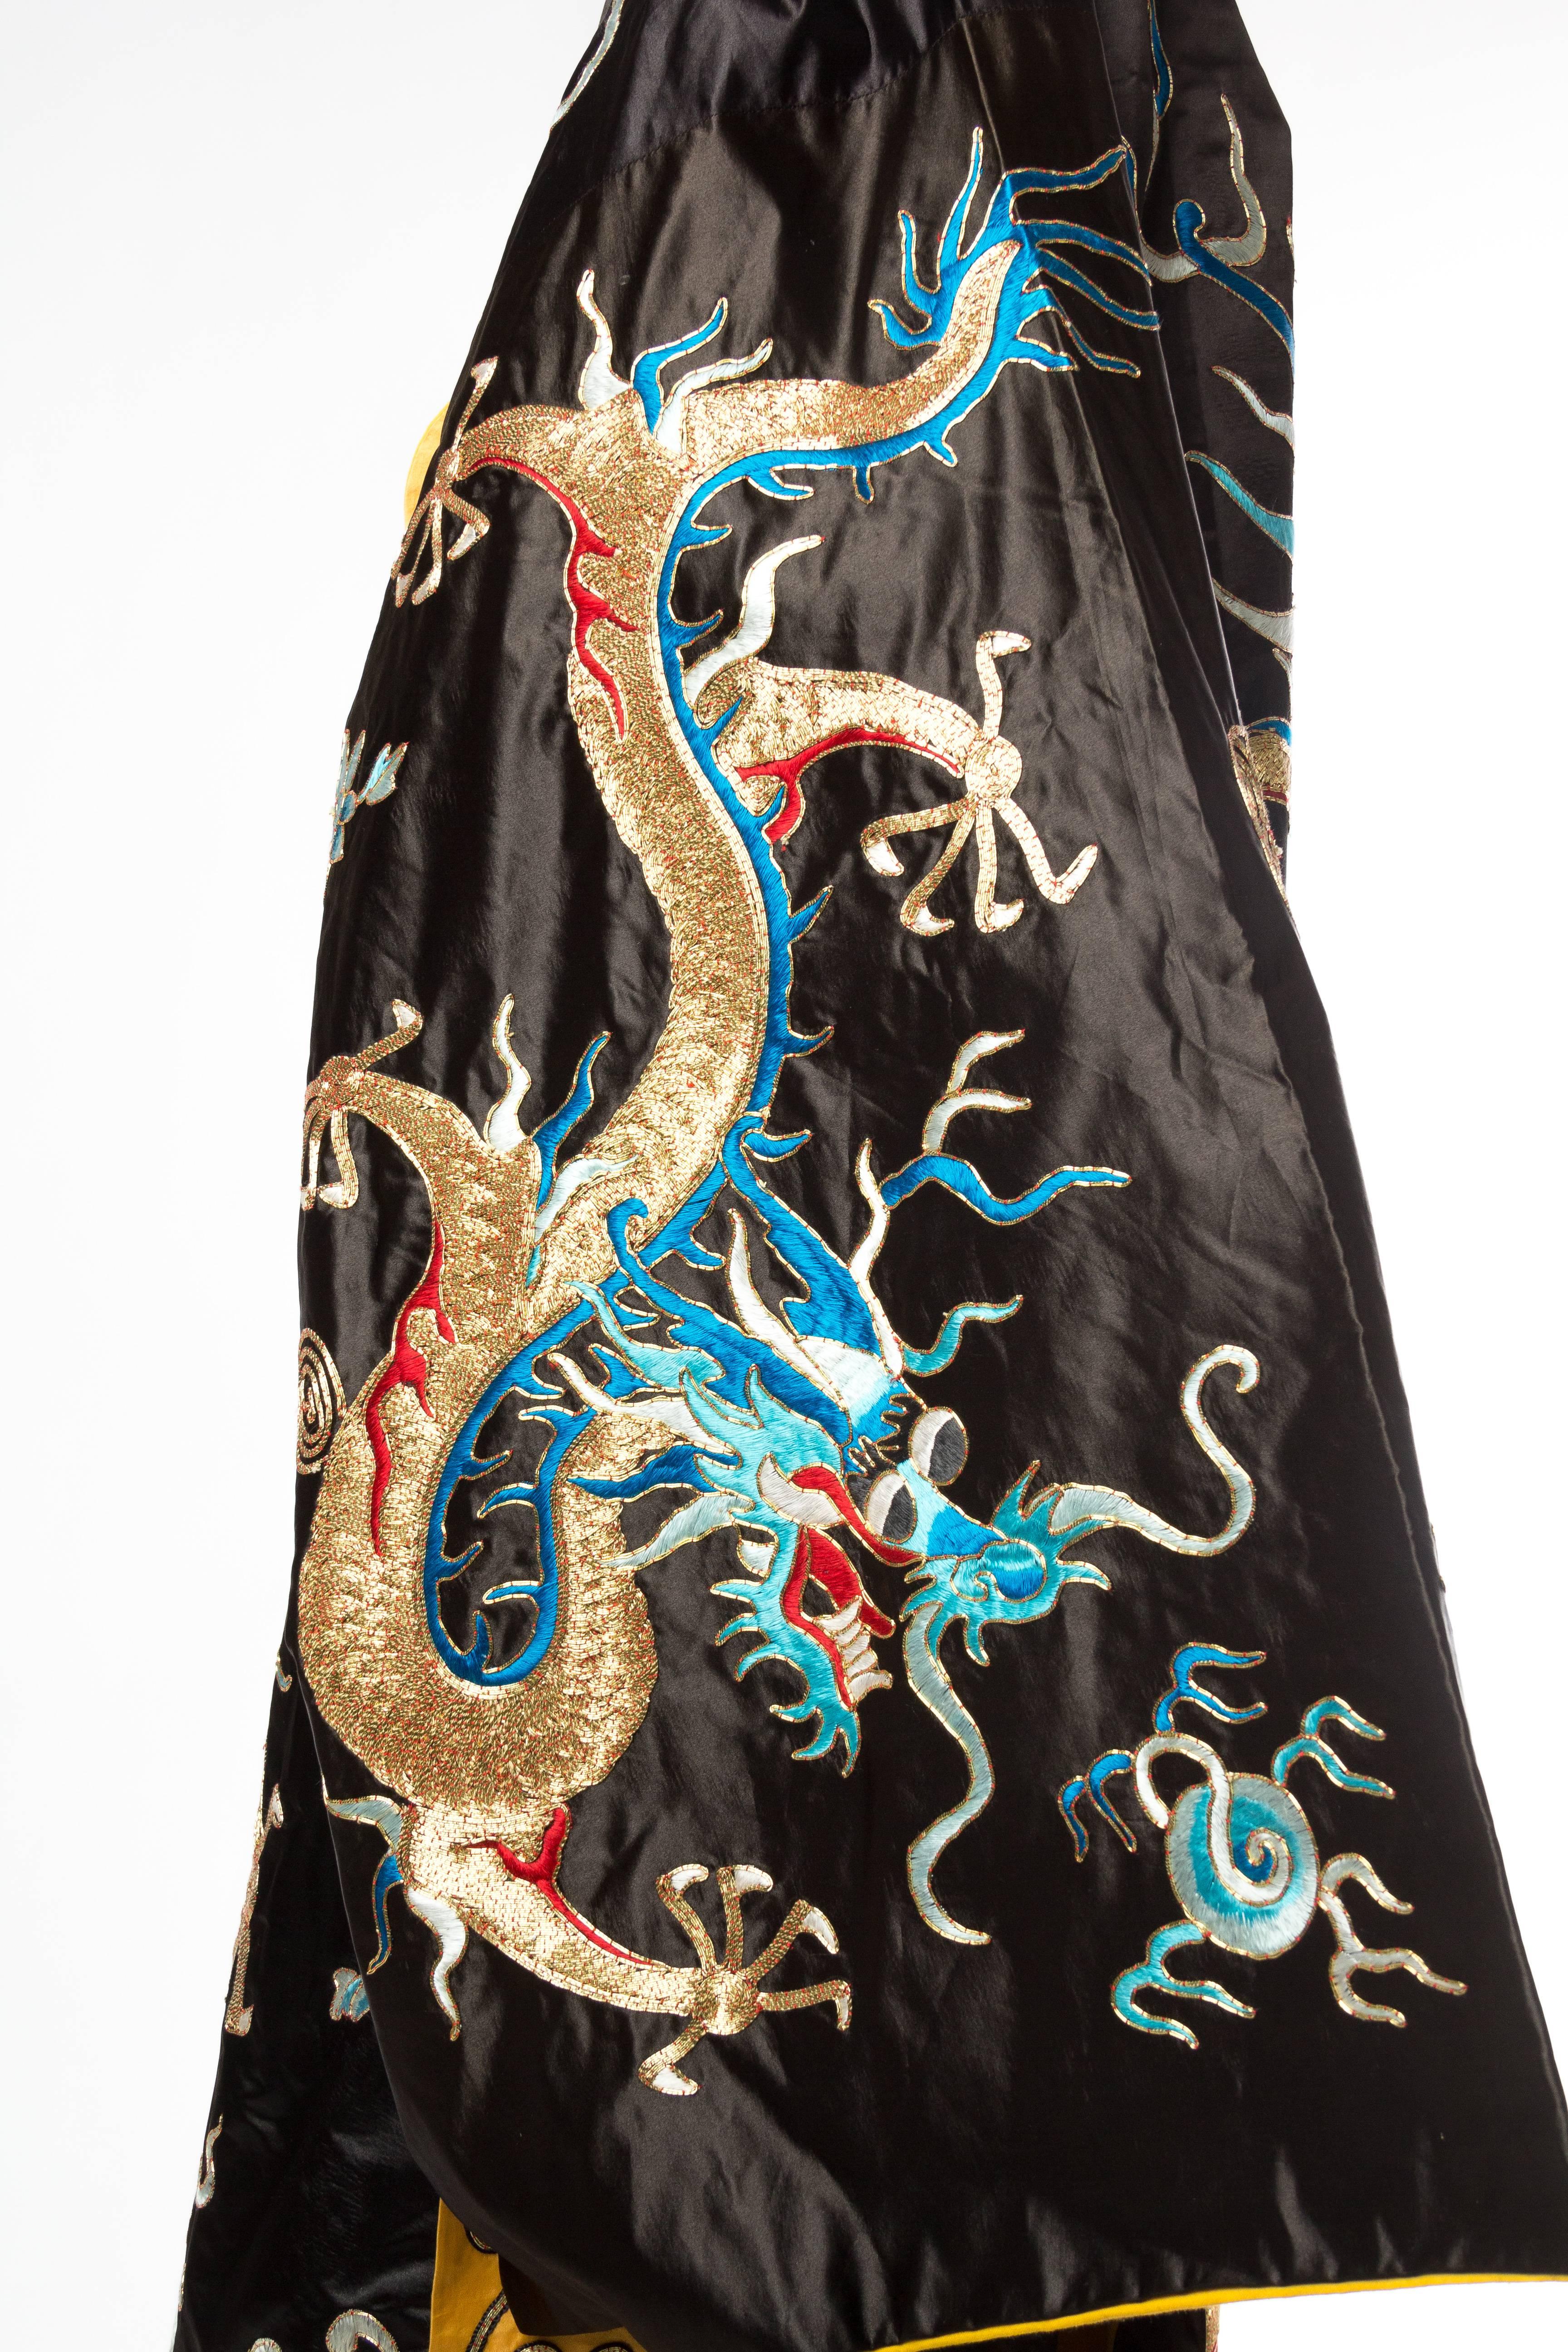 Black Chinese Opera Emperor's Dragon Robe